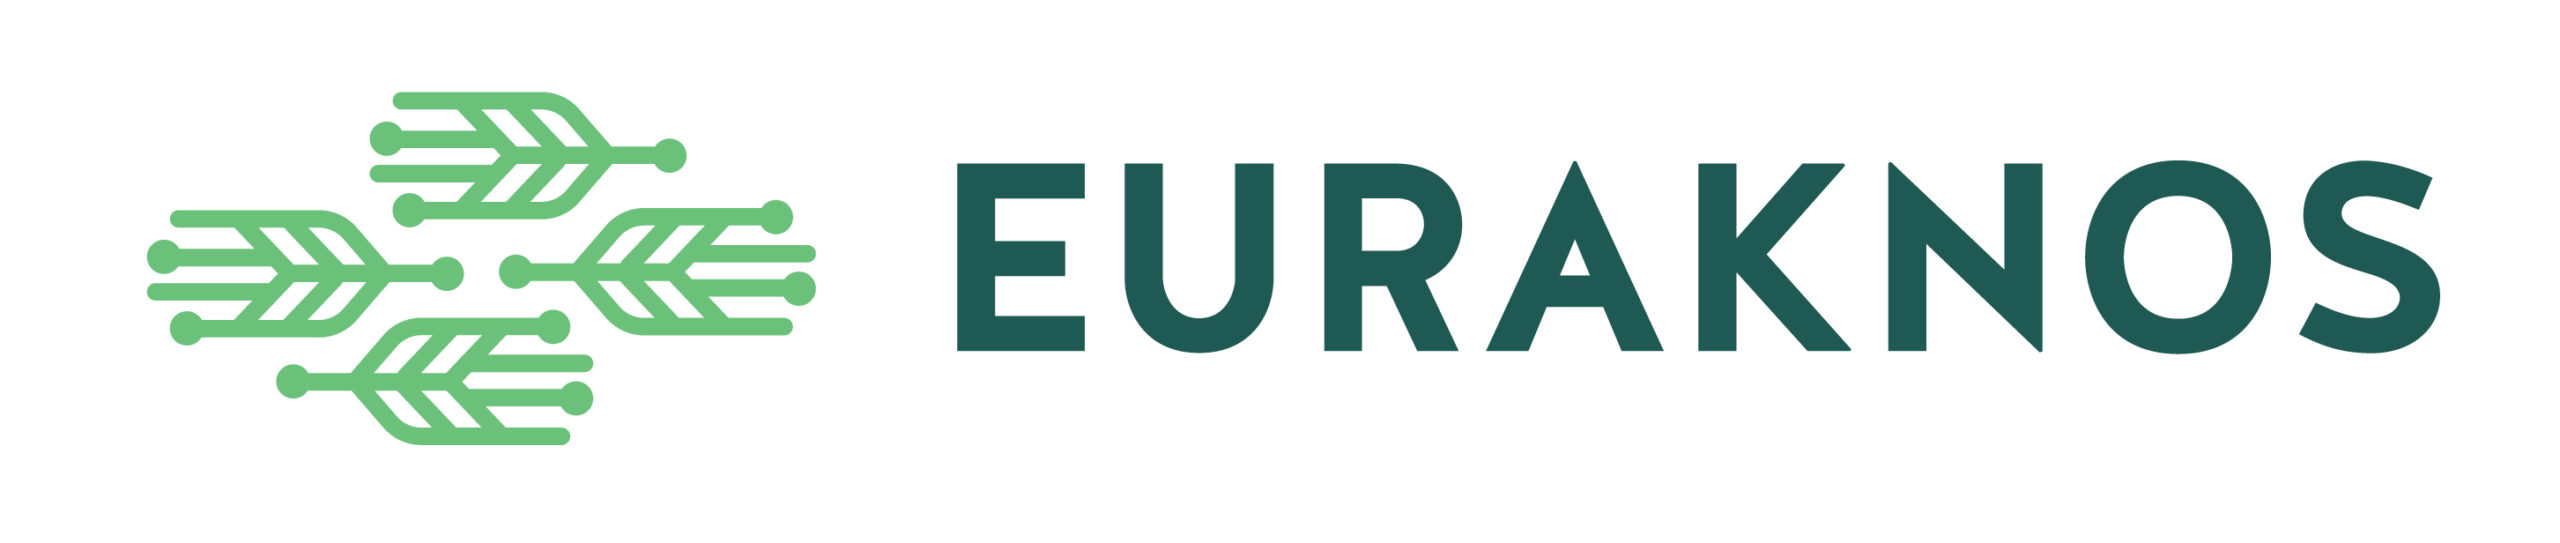 EURAKNOS logo